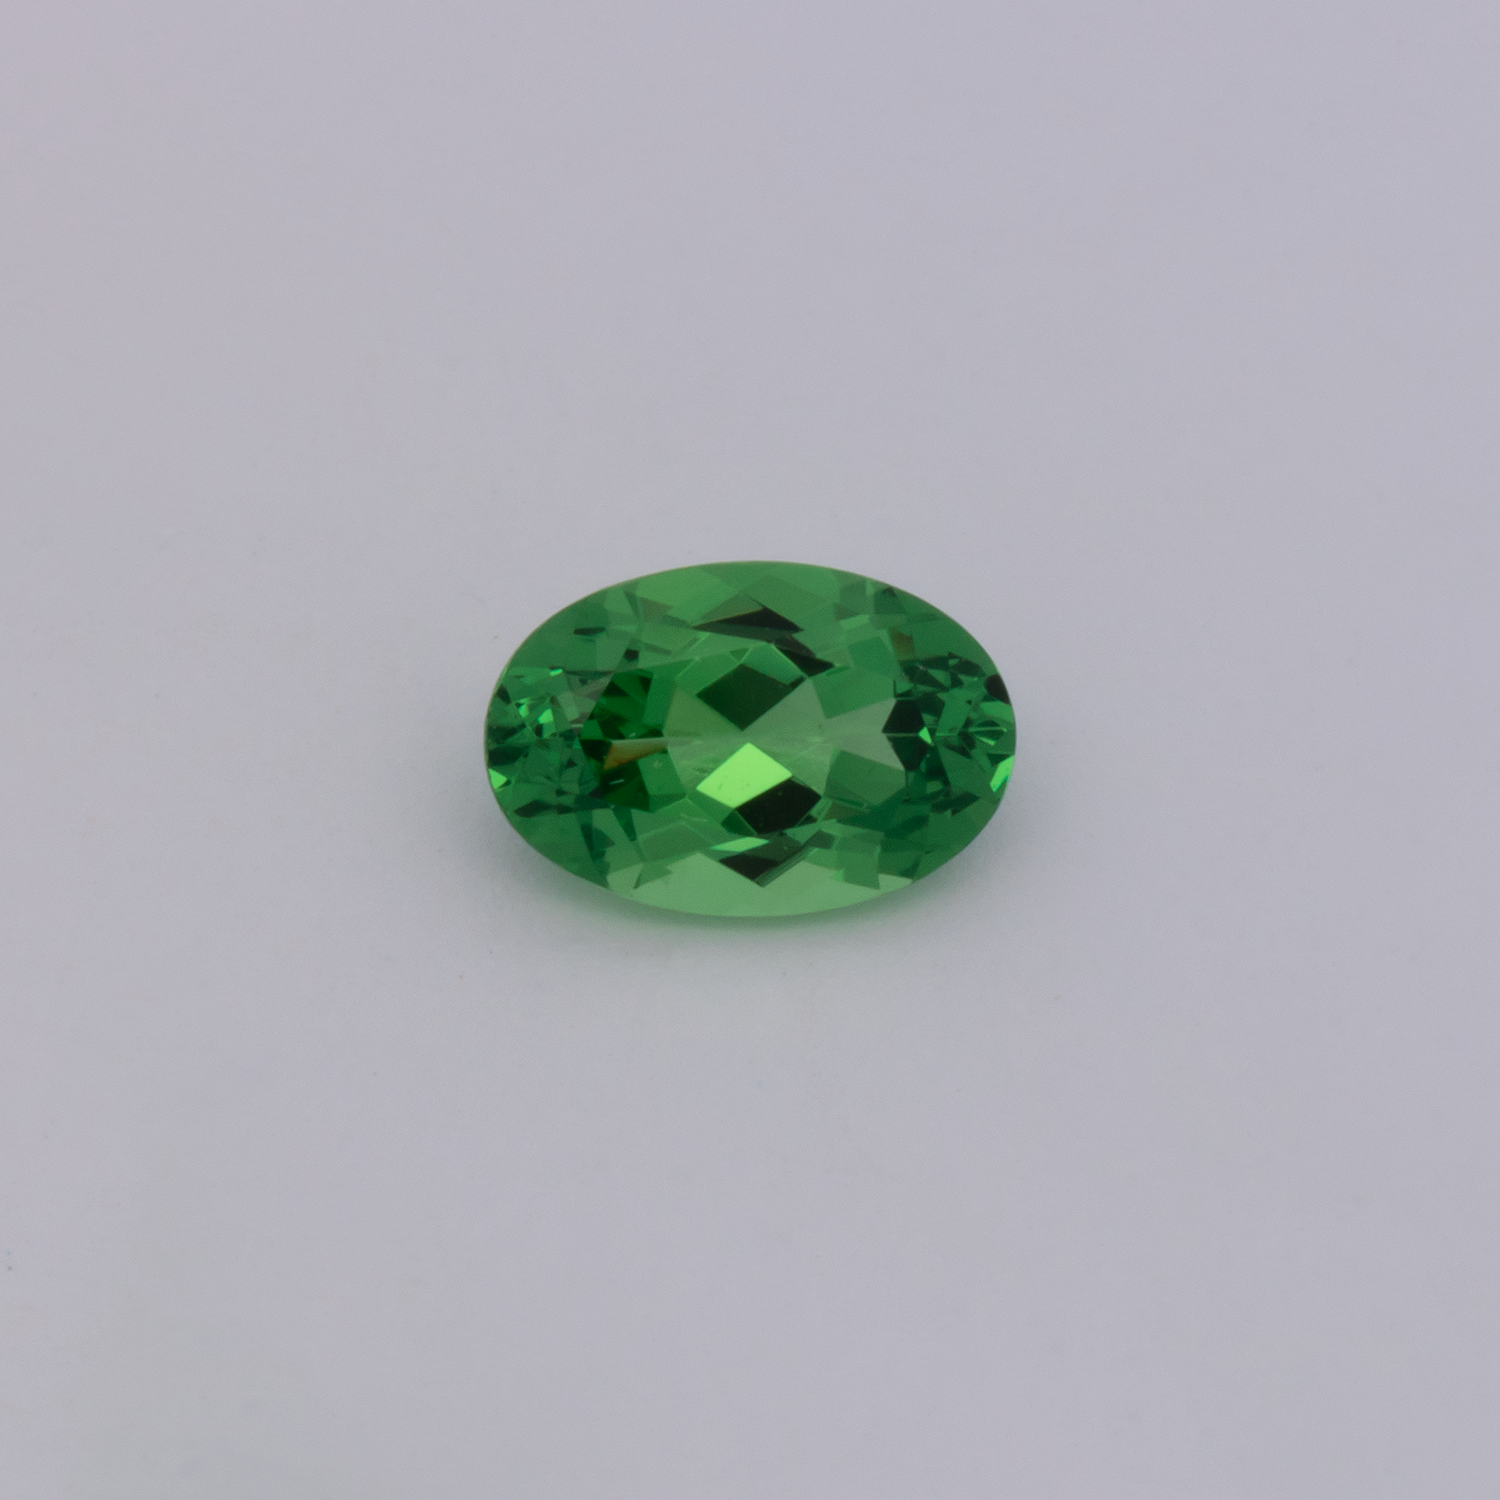 Tsavorit - grün, oval, 7.2x4.8 mm, 0.85 cts, Nr. TS91024